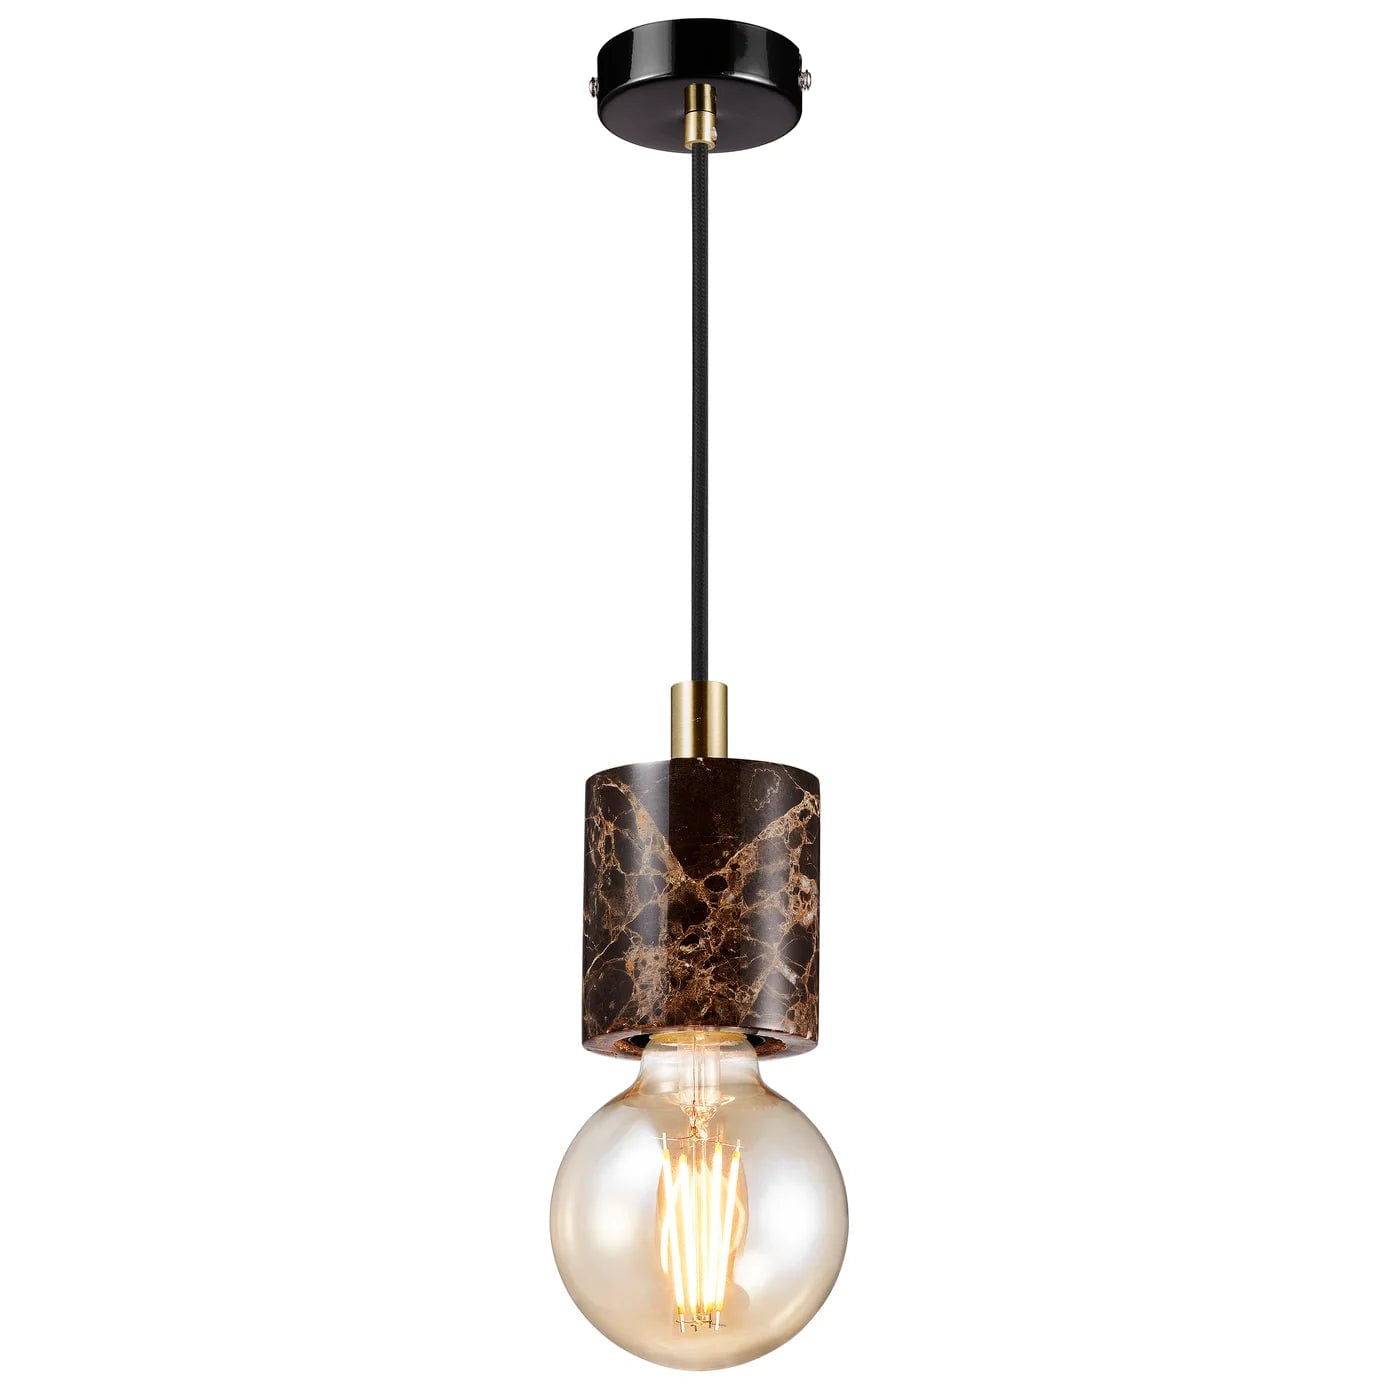 Lampa wisząca SIV brązowy marmur, Nordlux, Eye on Design